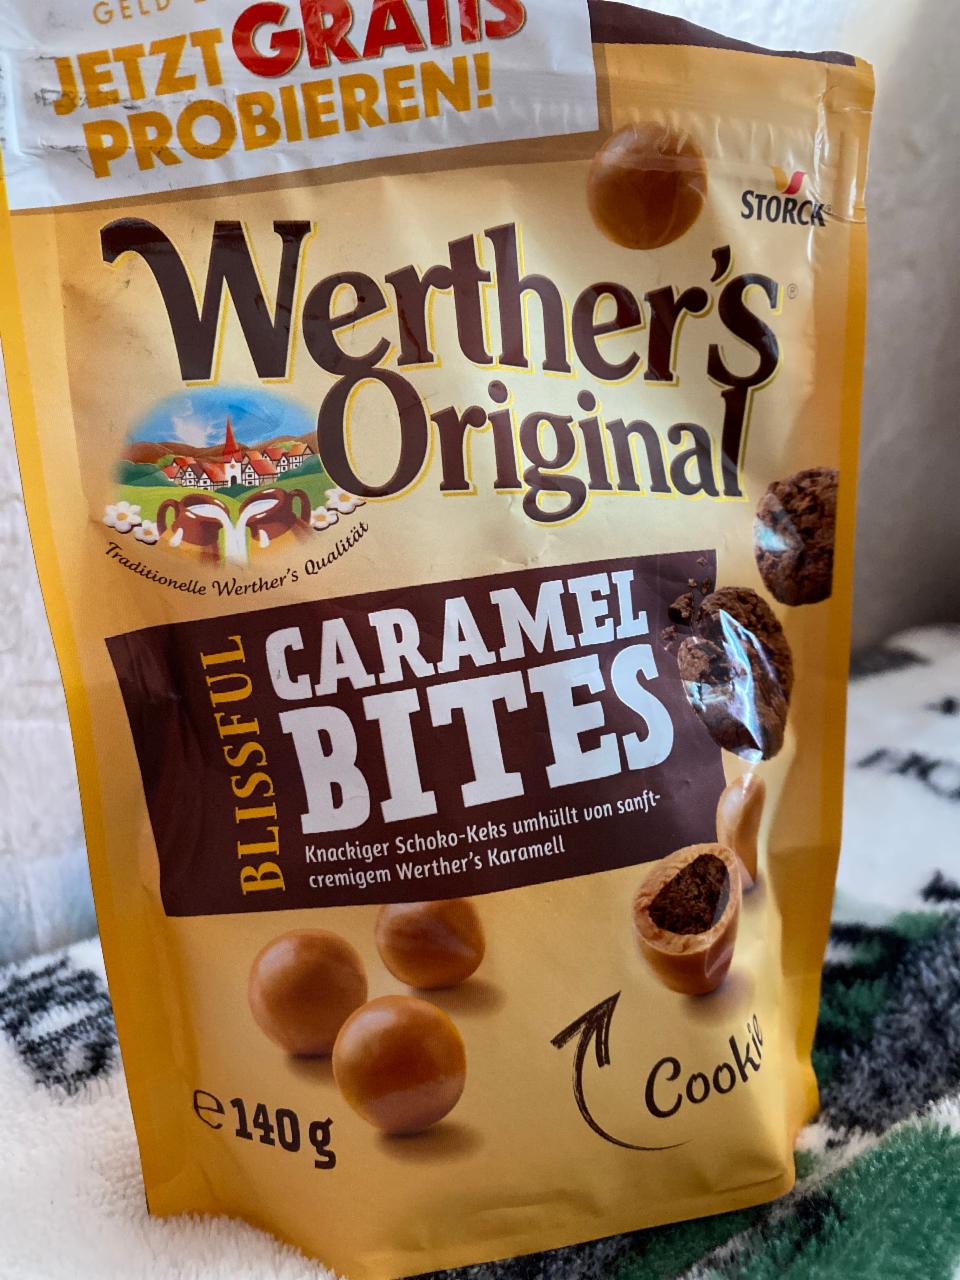 Képek - Werther’s Original Caramel Bites